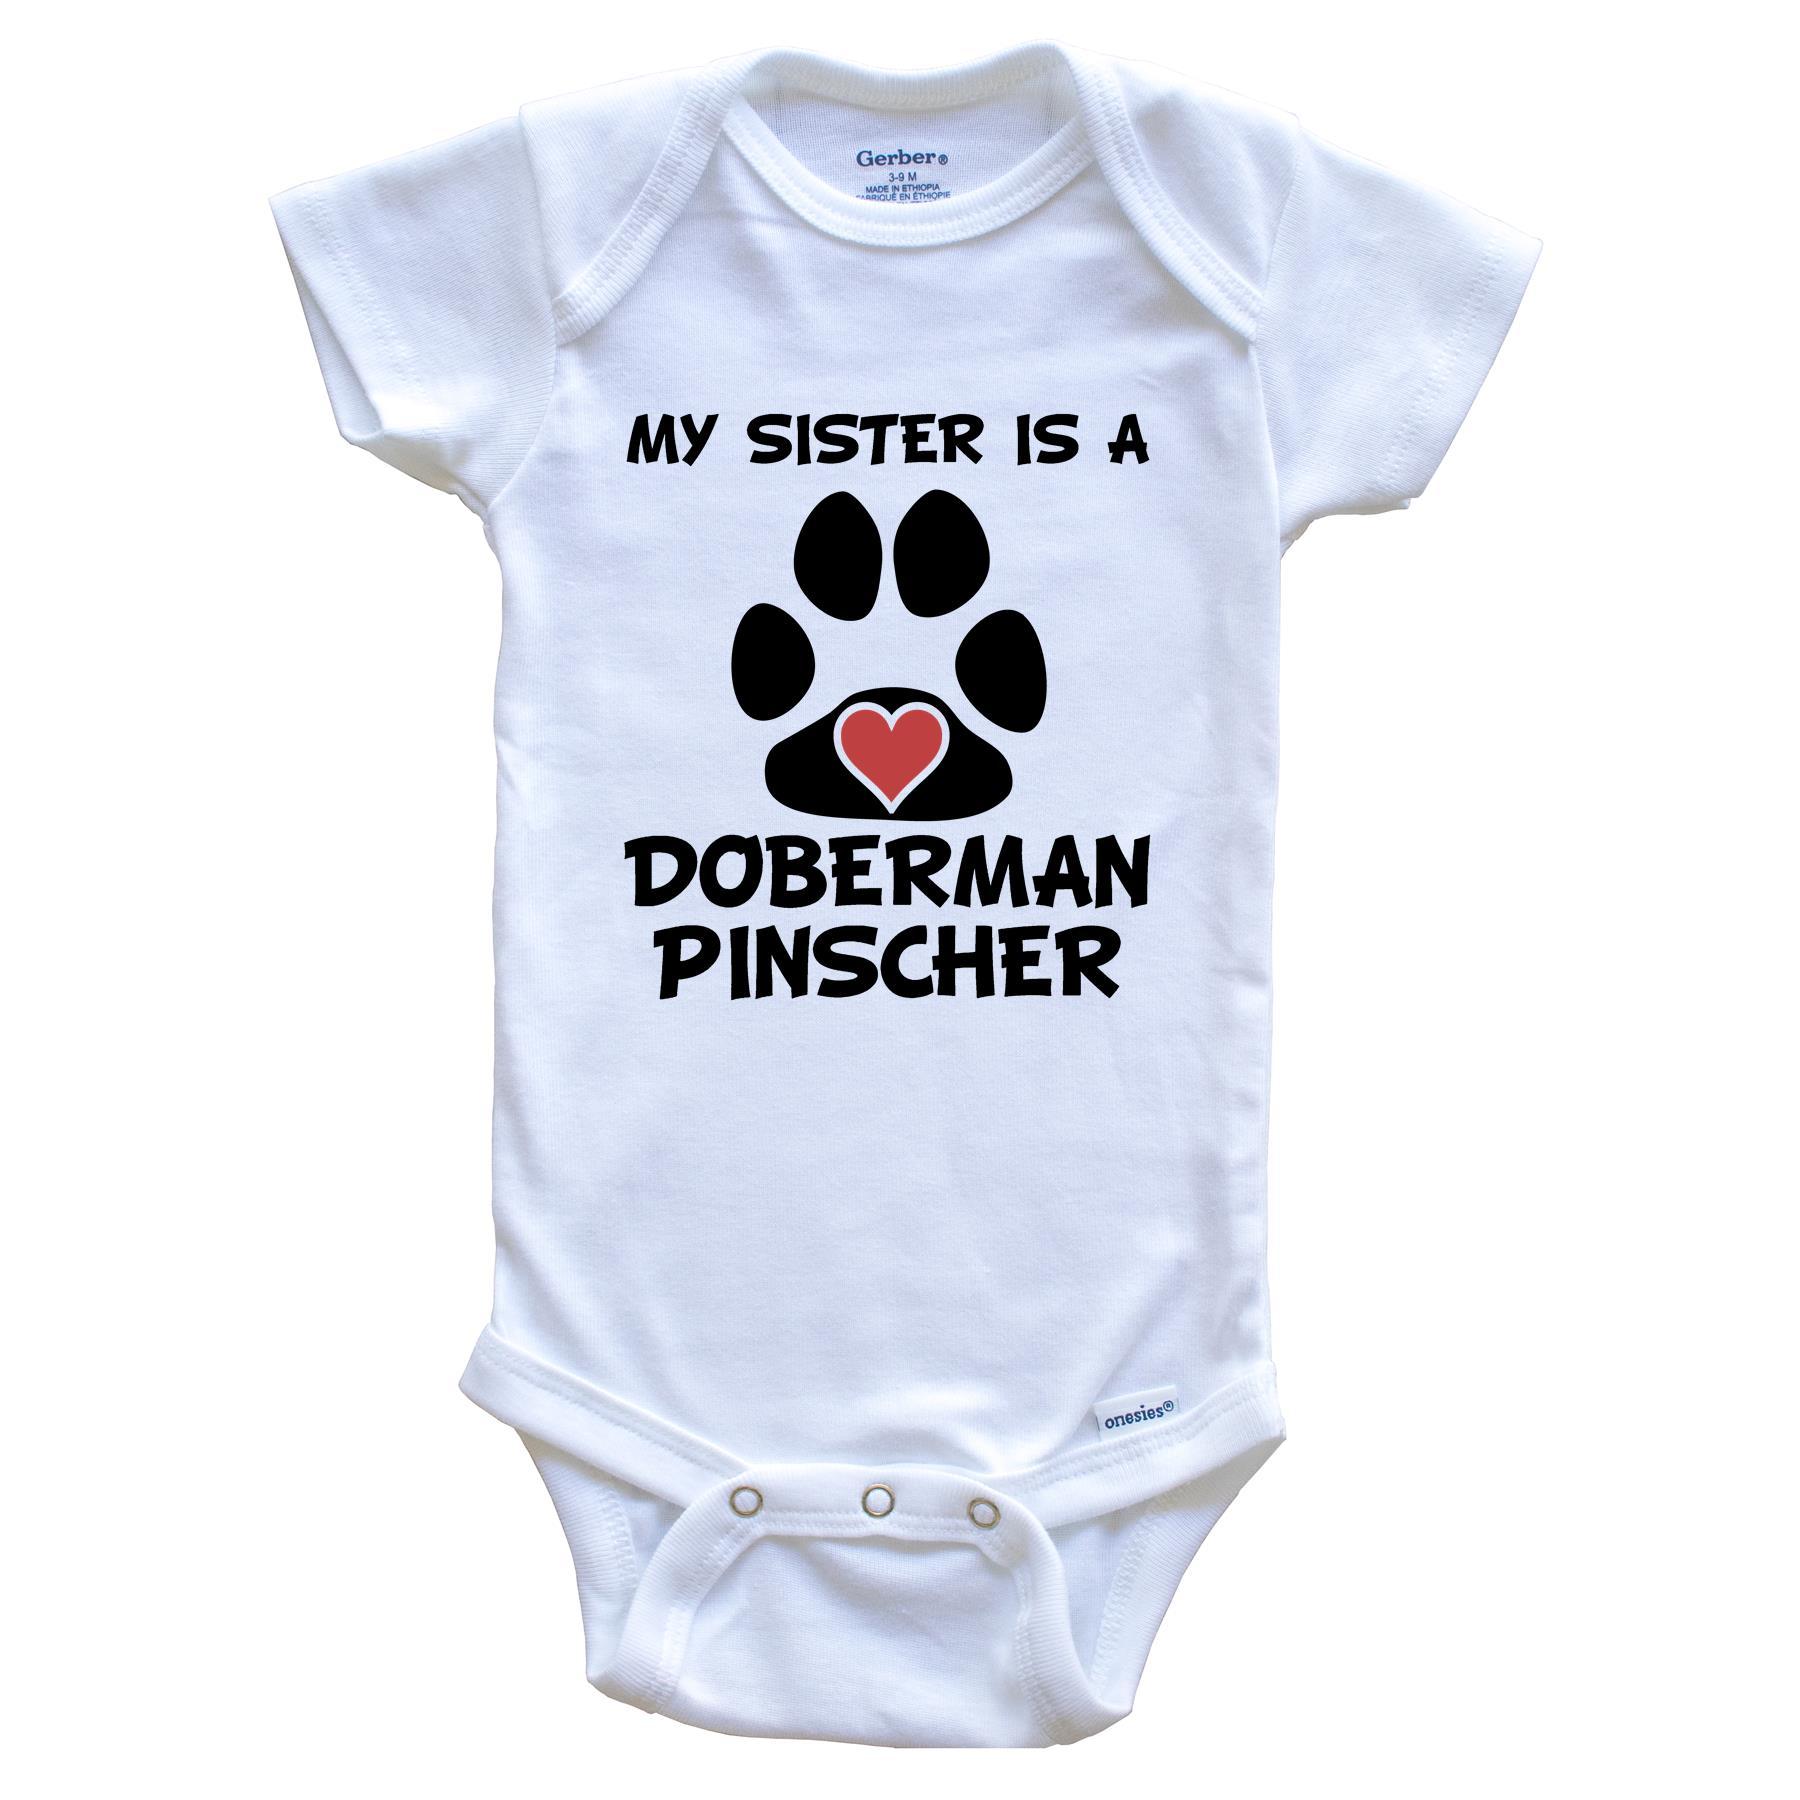 My Sister Is A Doberman Pinscher Baby Onesie